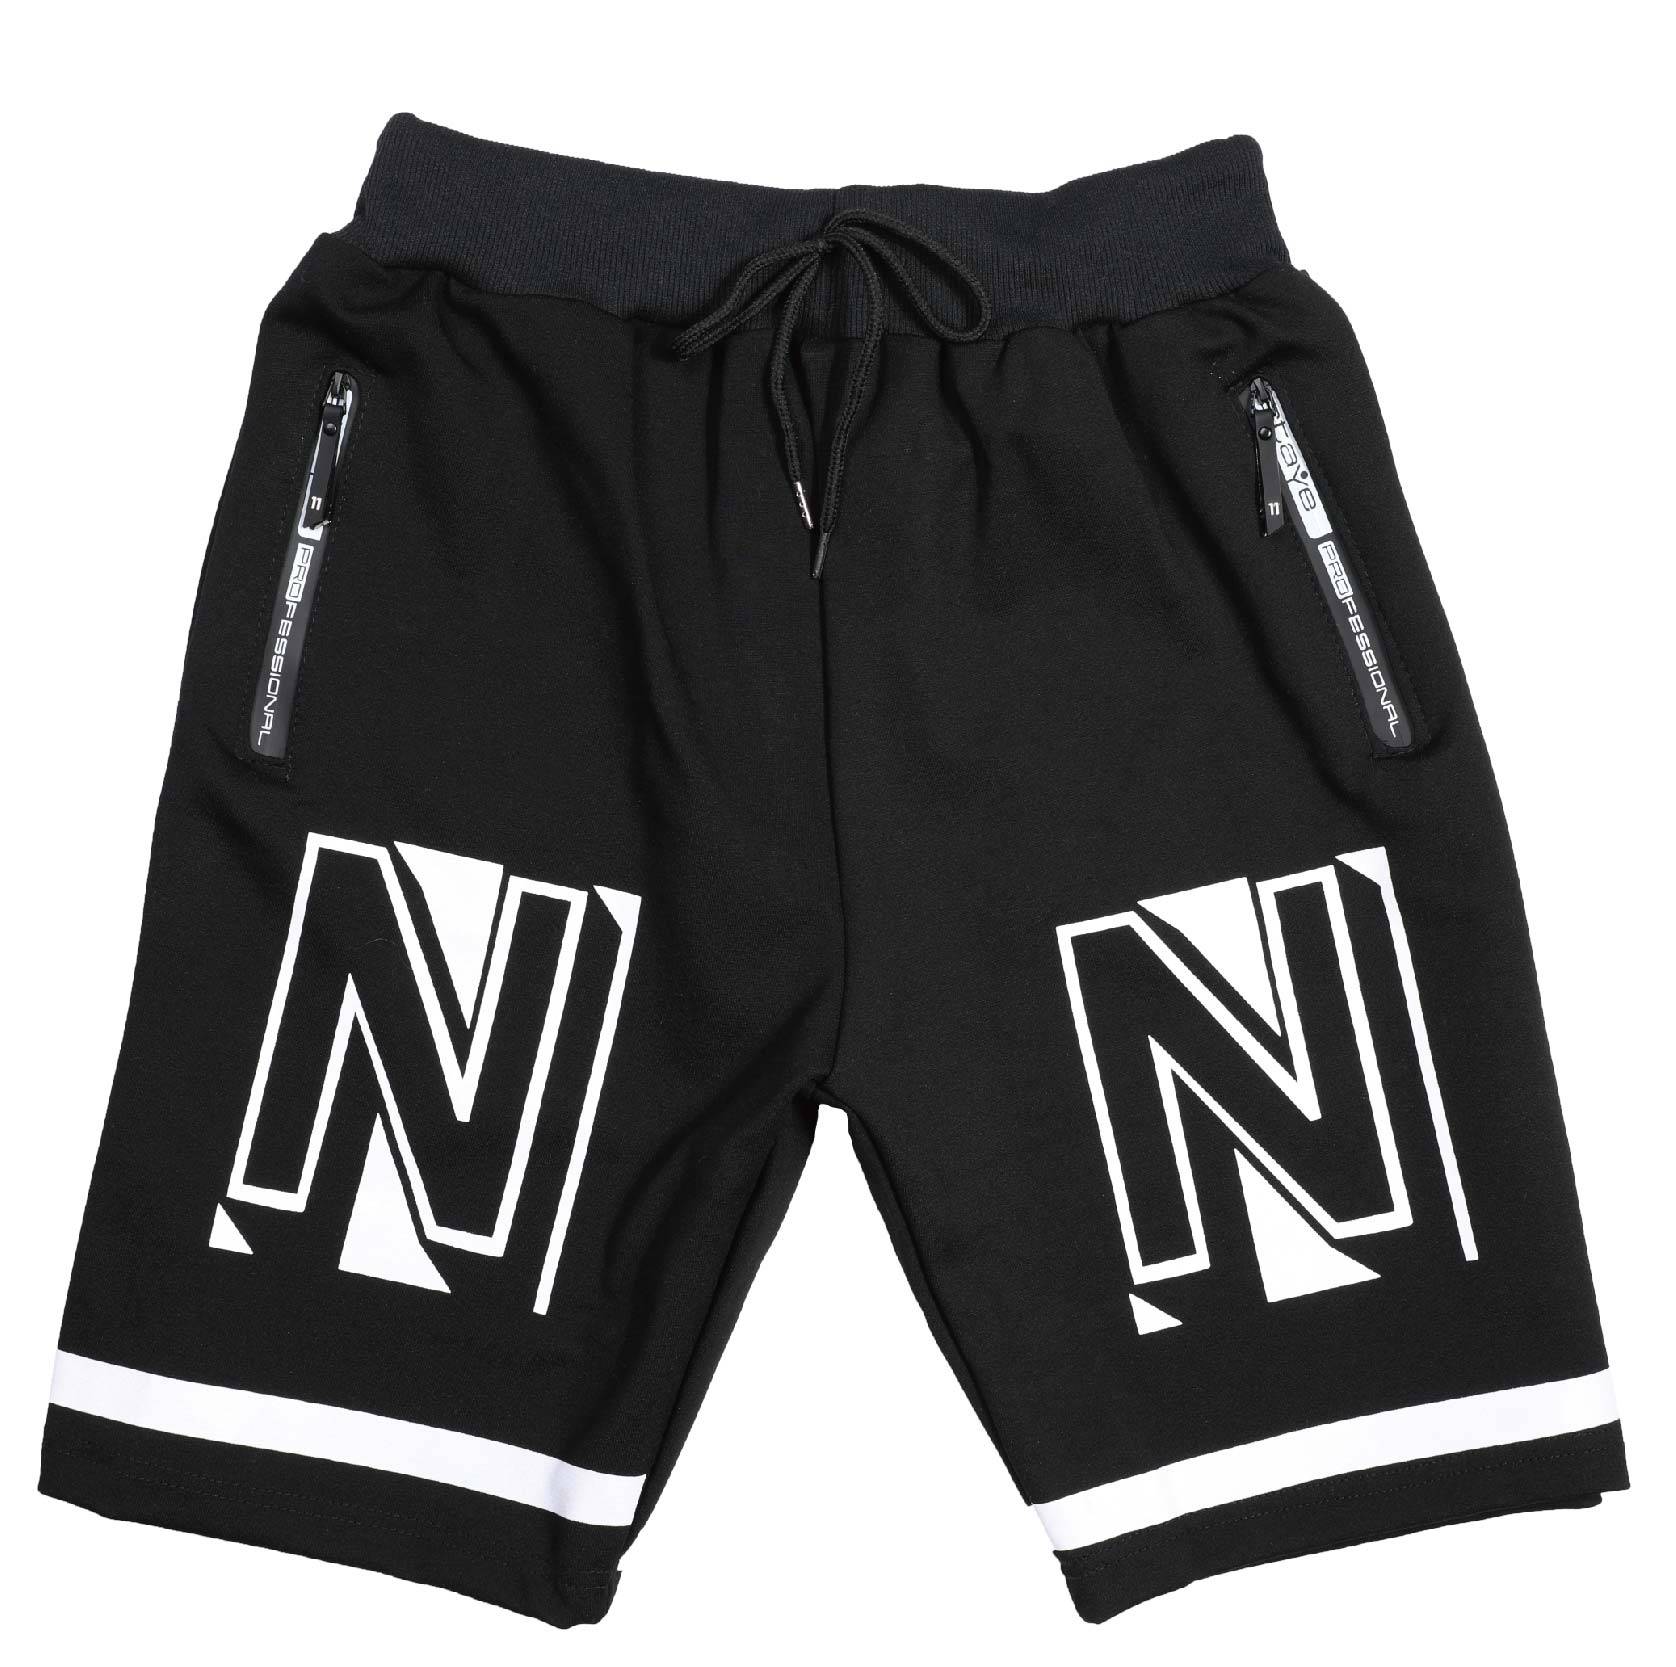 OEM Manufacturer Shorts Men - Ngozi Men’s Outdoor Lightweight Quick Dry Hiking Shorts/ Sports Casual Shorts – Fullerton